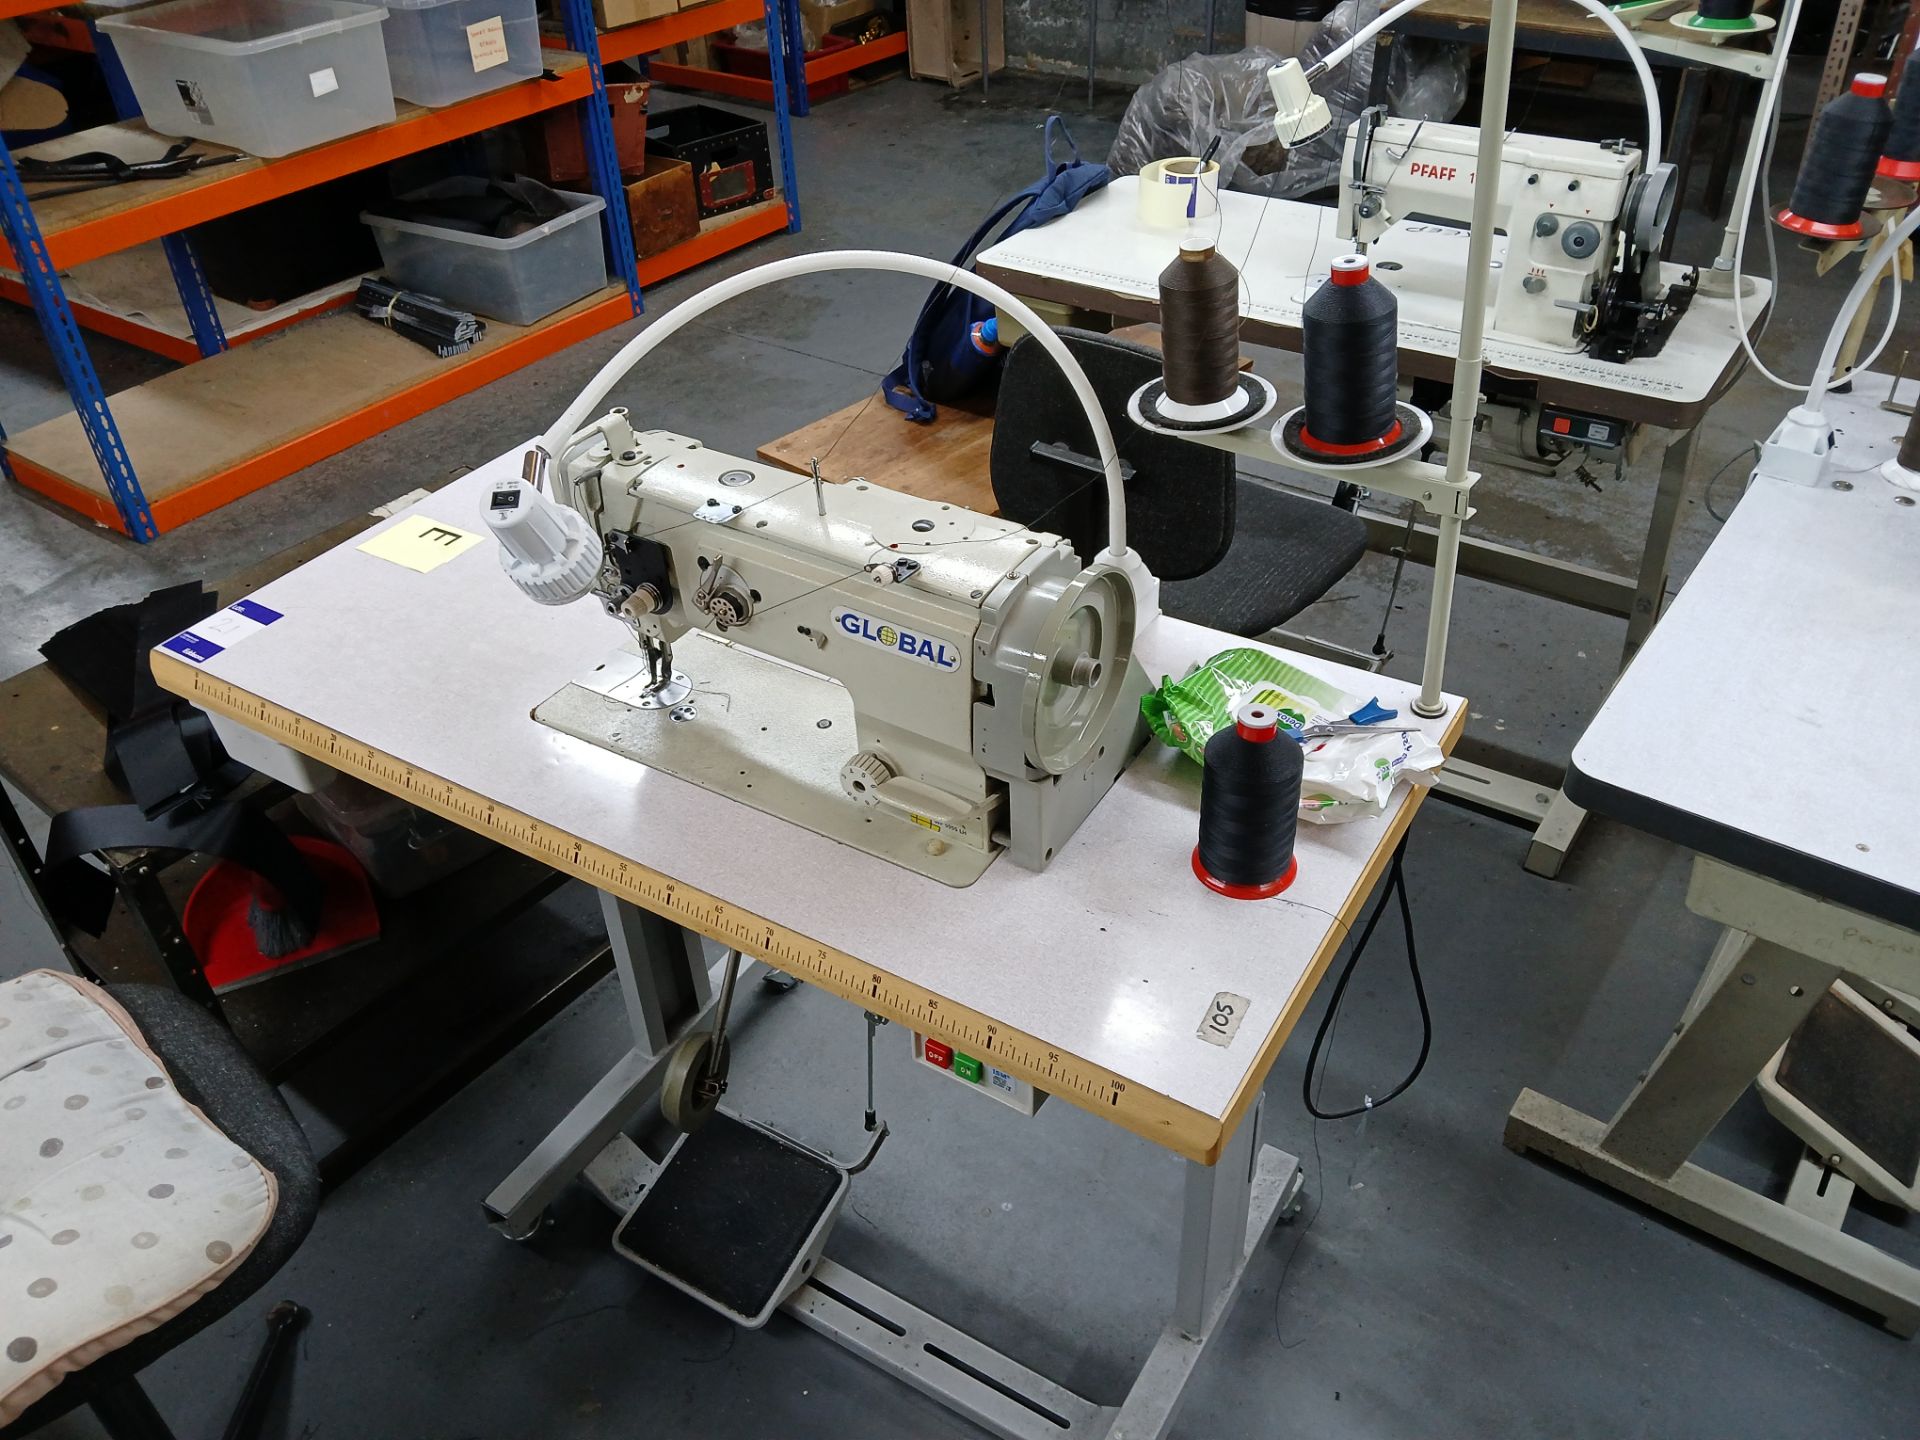 Global WF5555LH industrial sewing machine